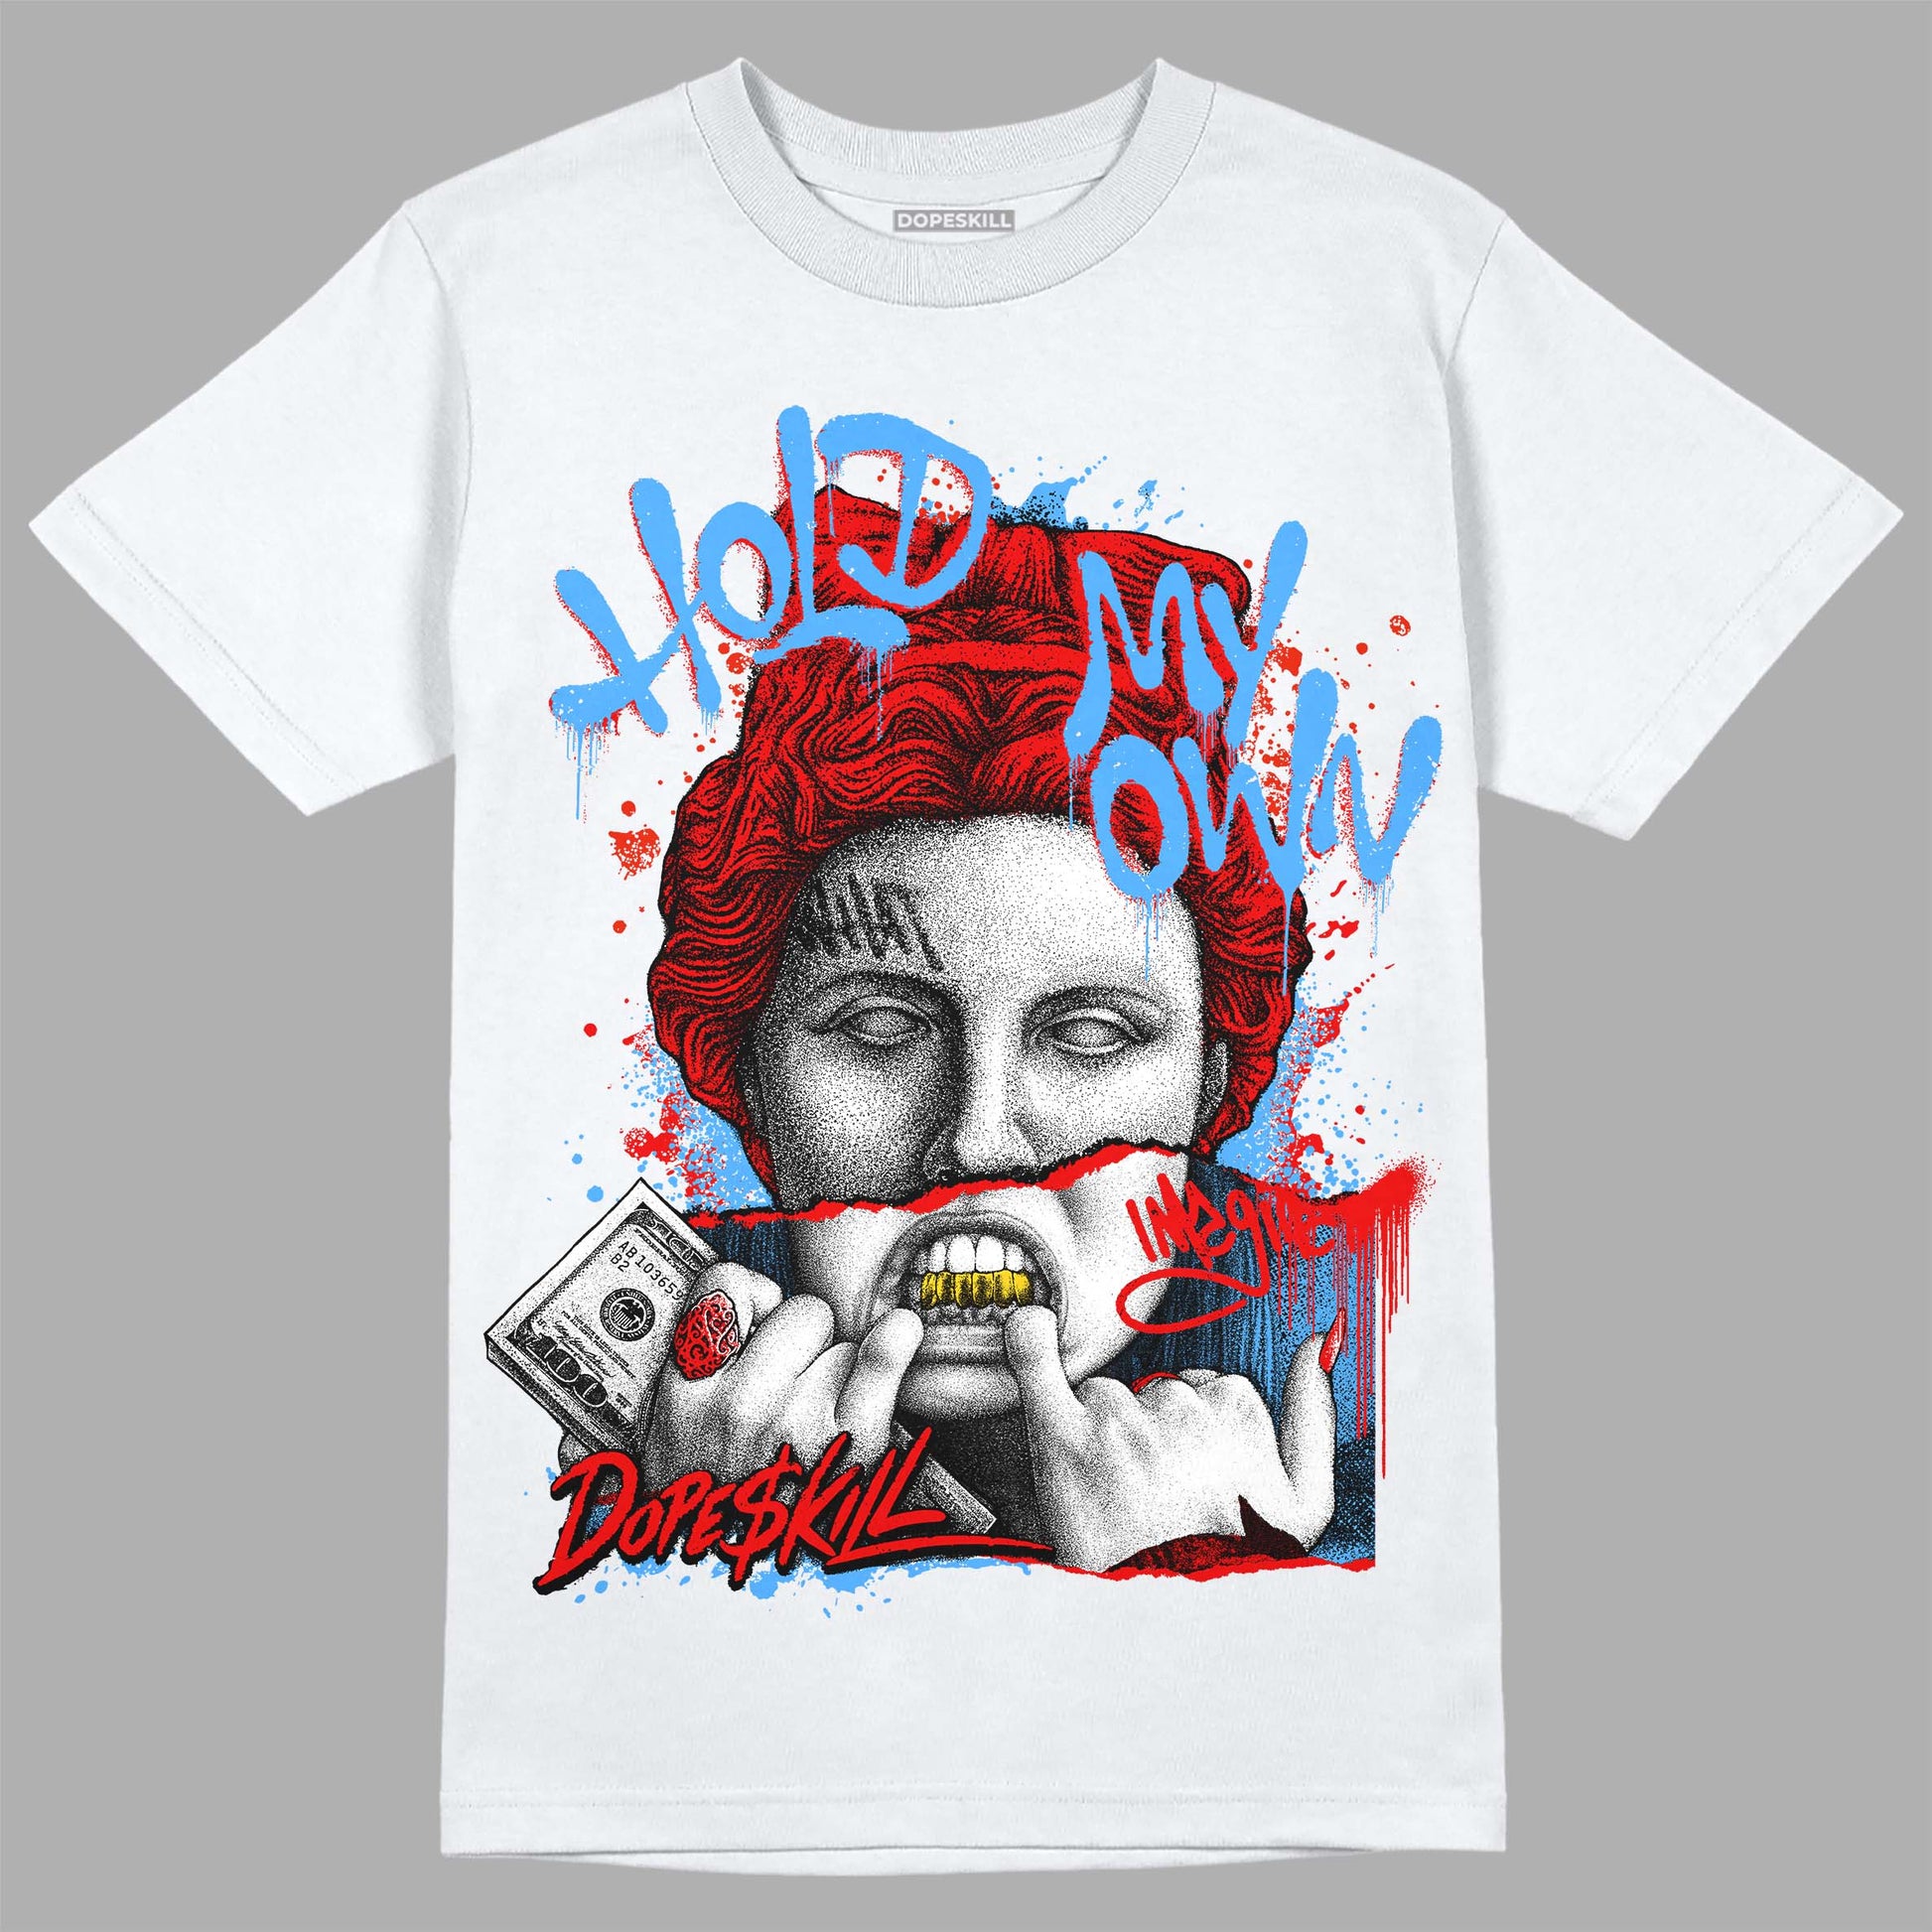 Jordan 11 Retro Cherry DopeSkill T-shirt Hold My Own Graphic Streetwear - White